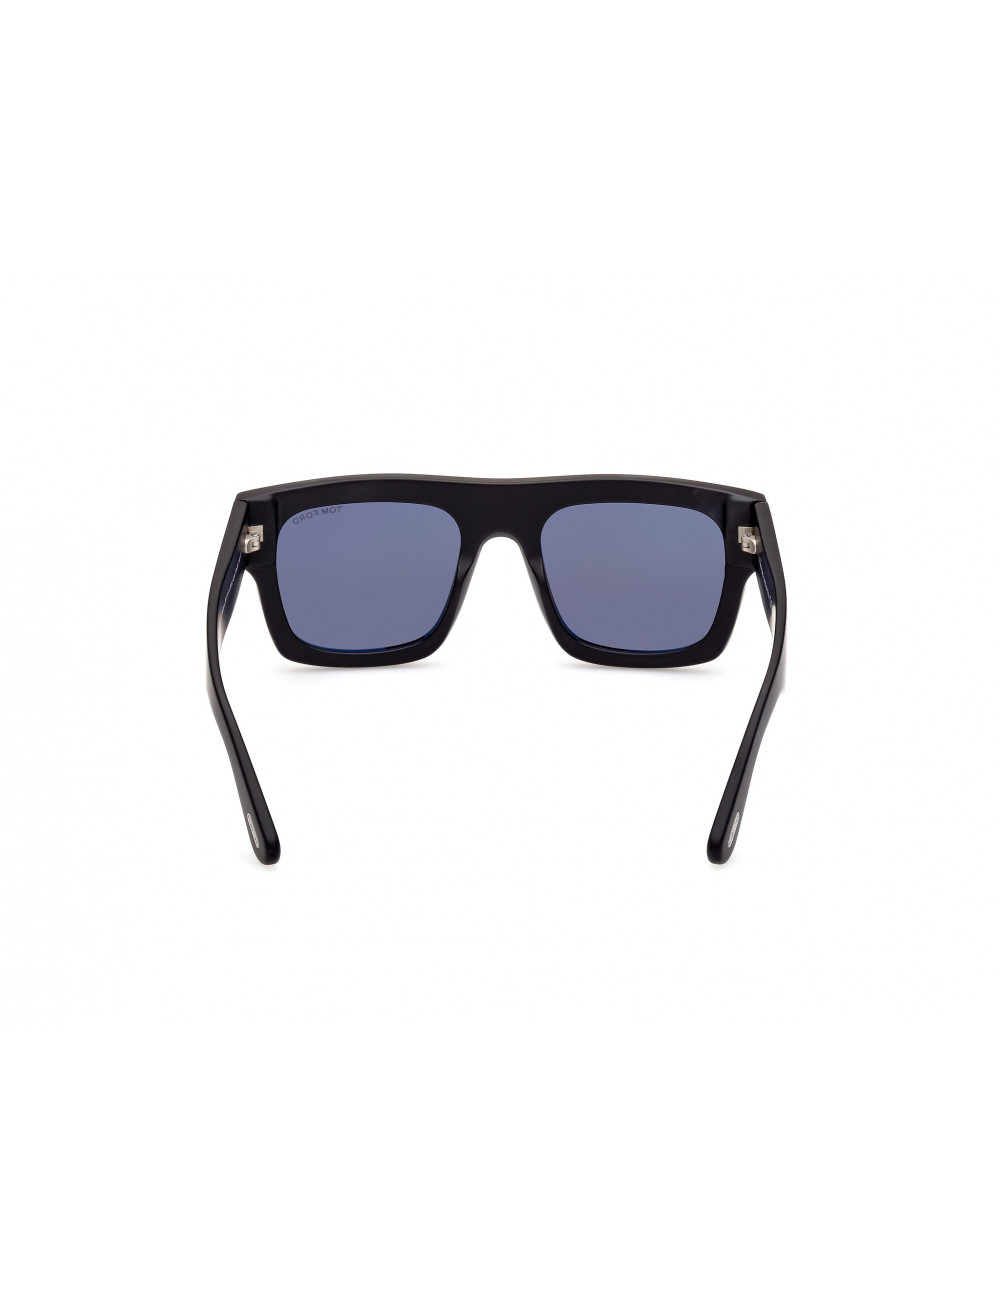 Tom Ford FT0711 Fausto 01A sunglasses for men – Ottica Mauro